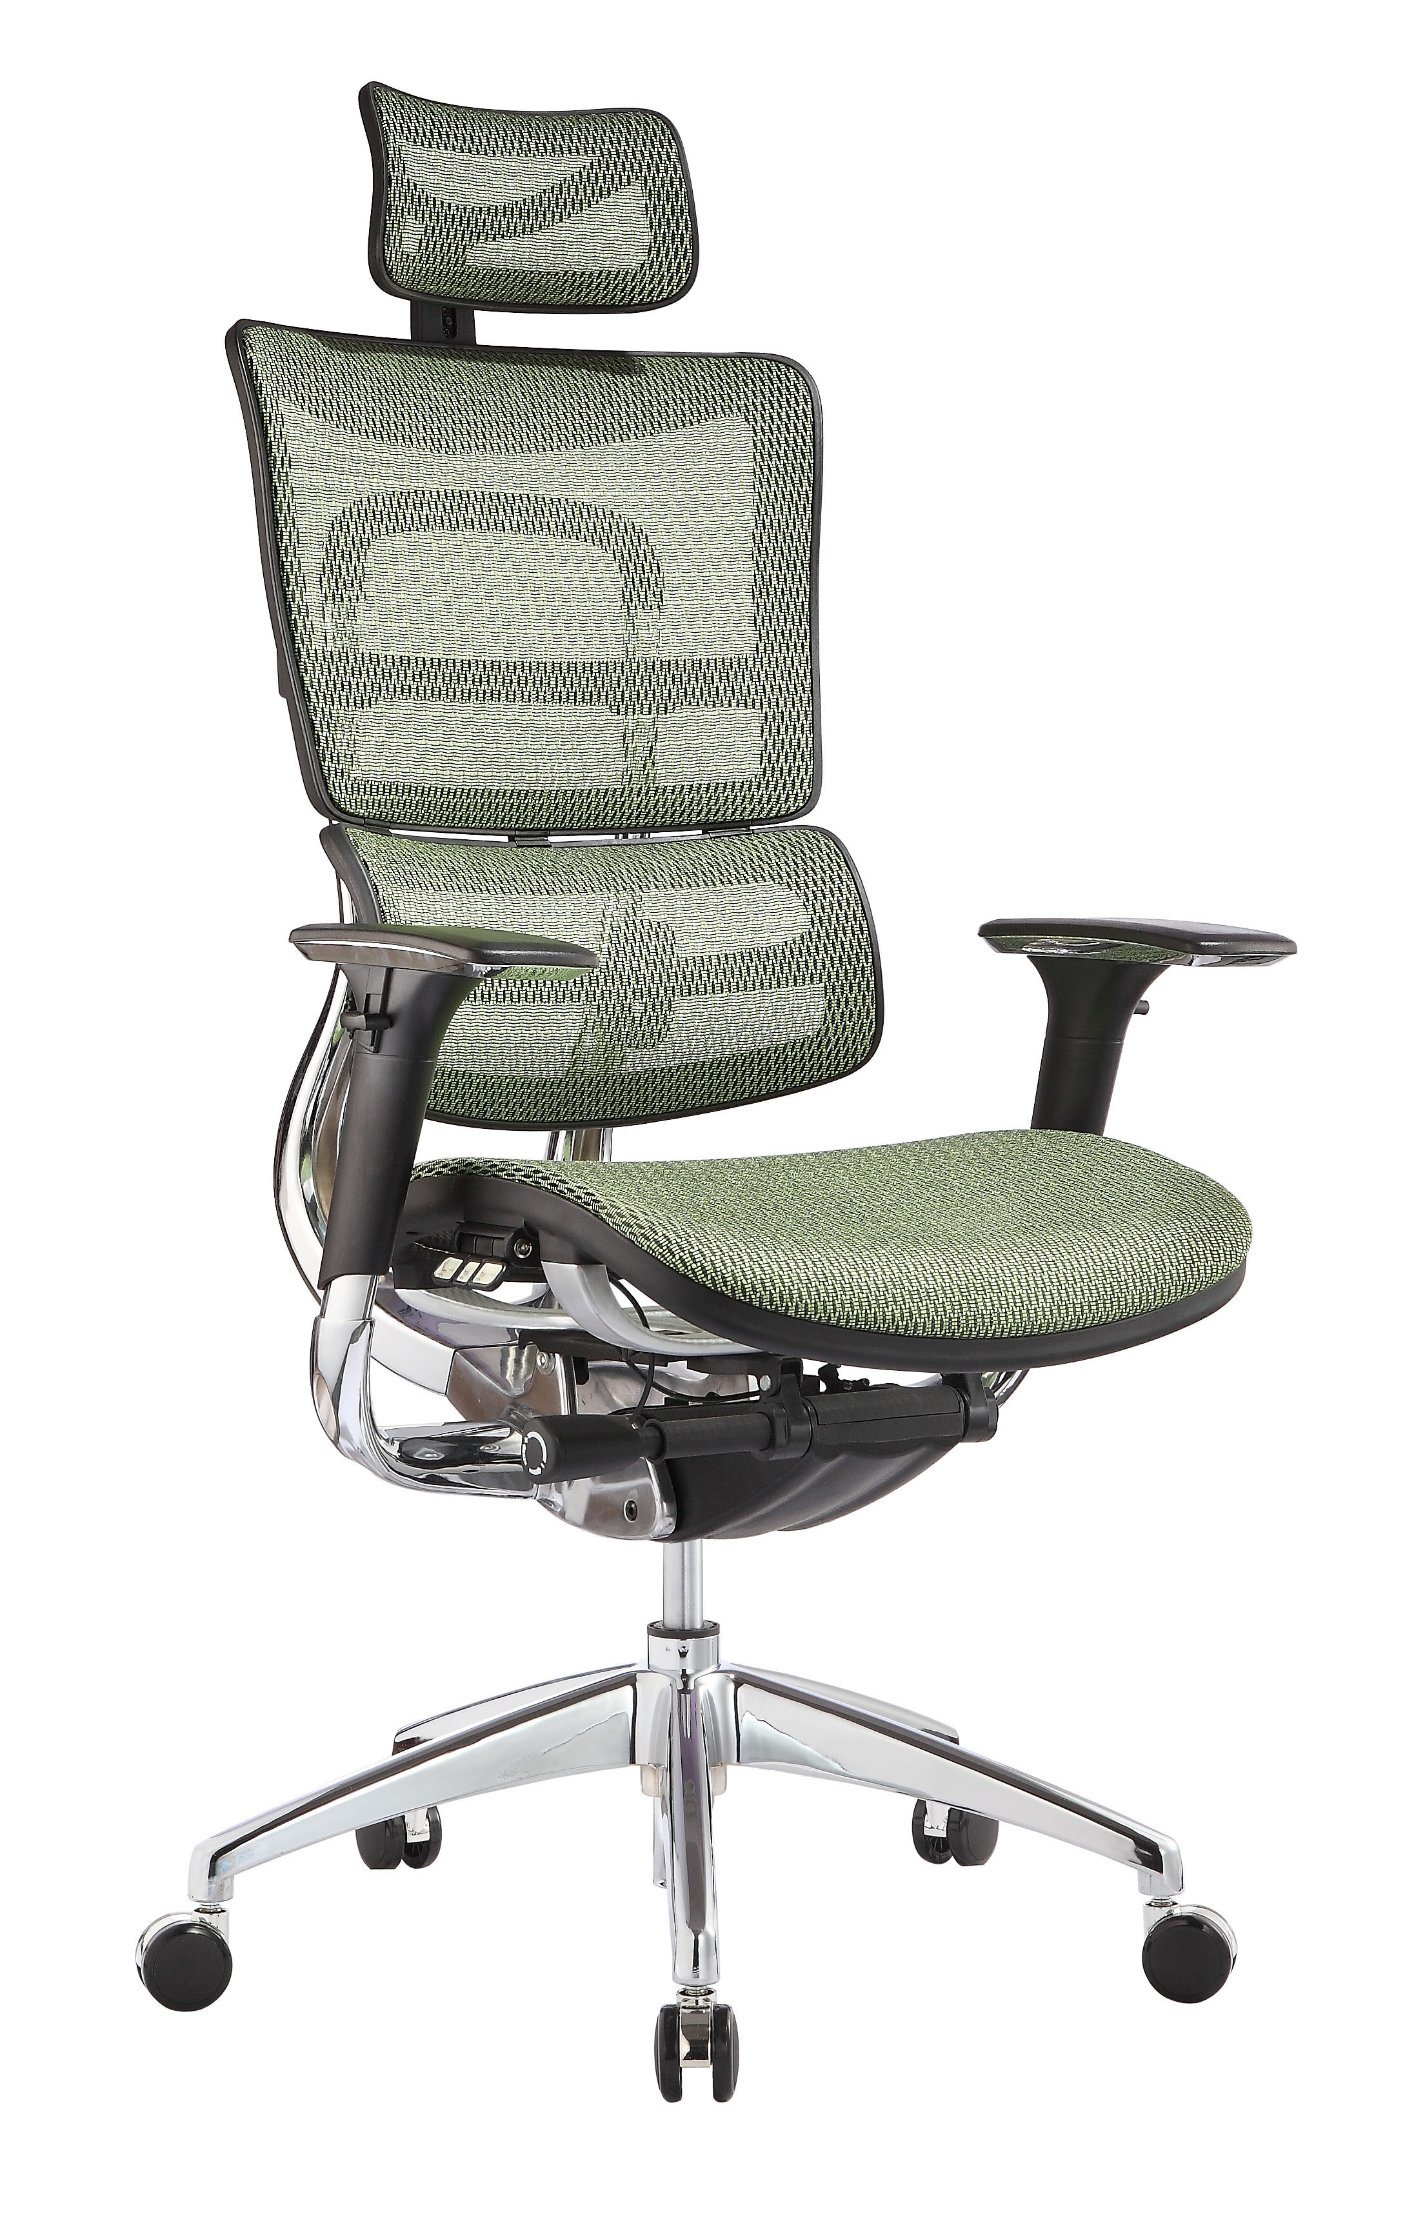 BIFMA Chair Best Ergonomic Office Chair